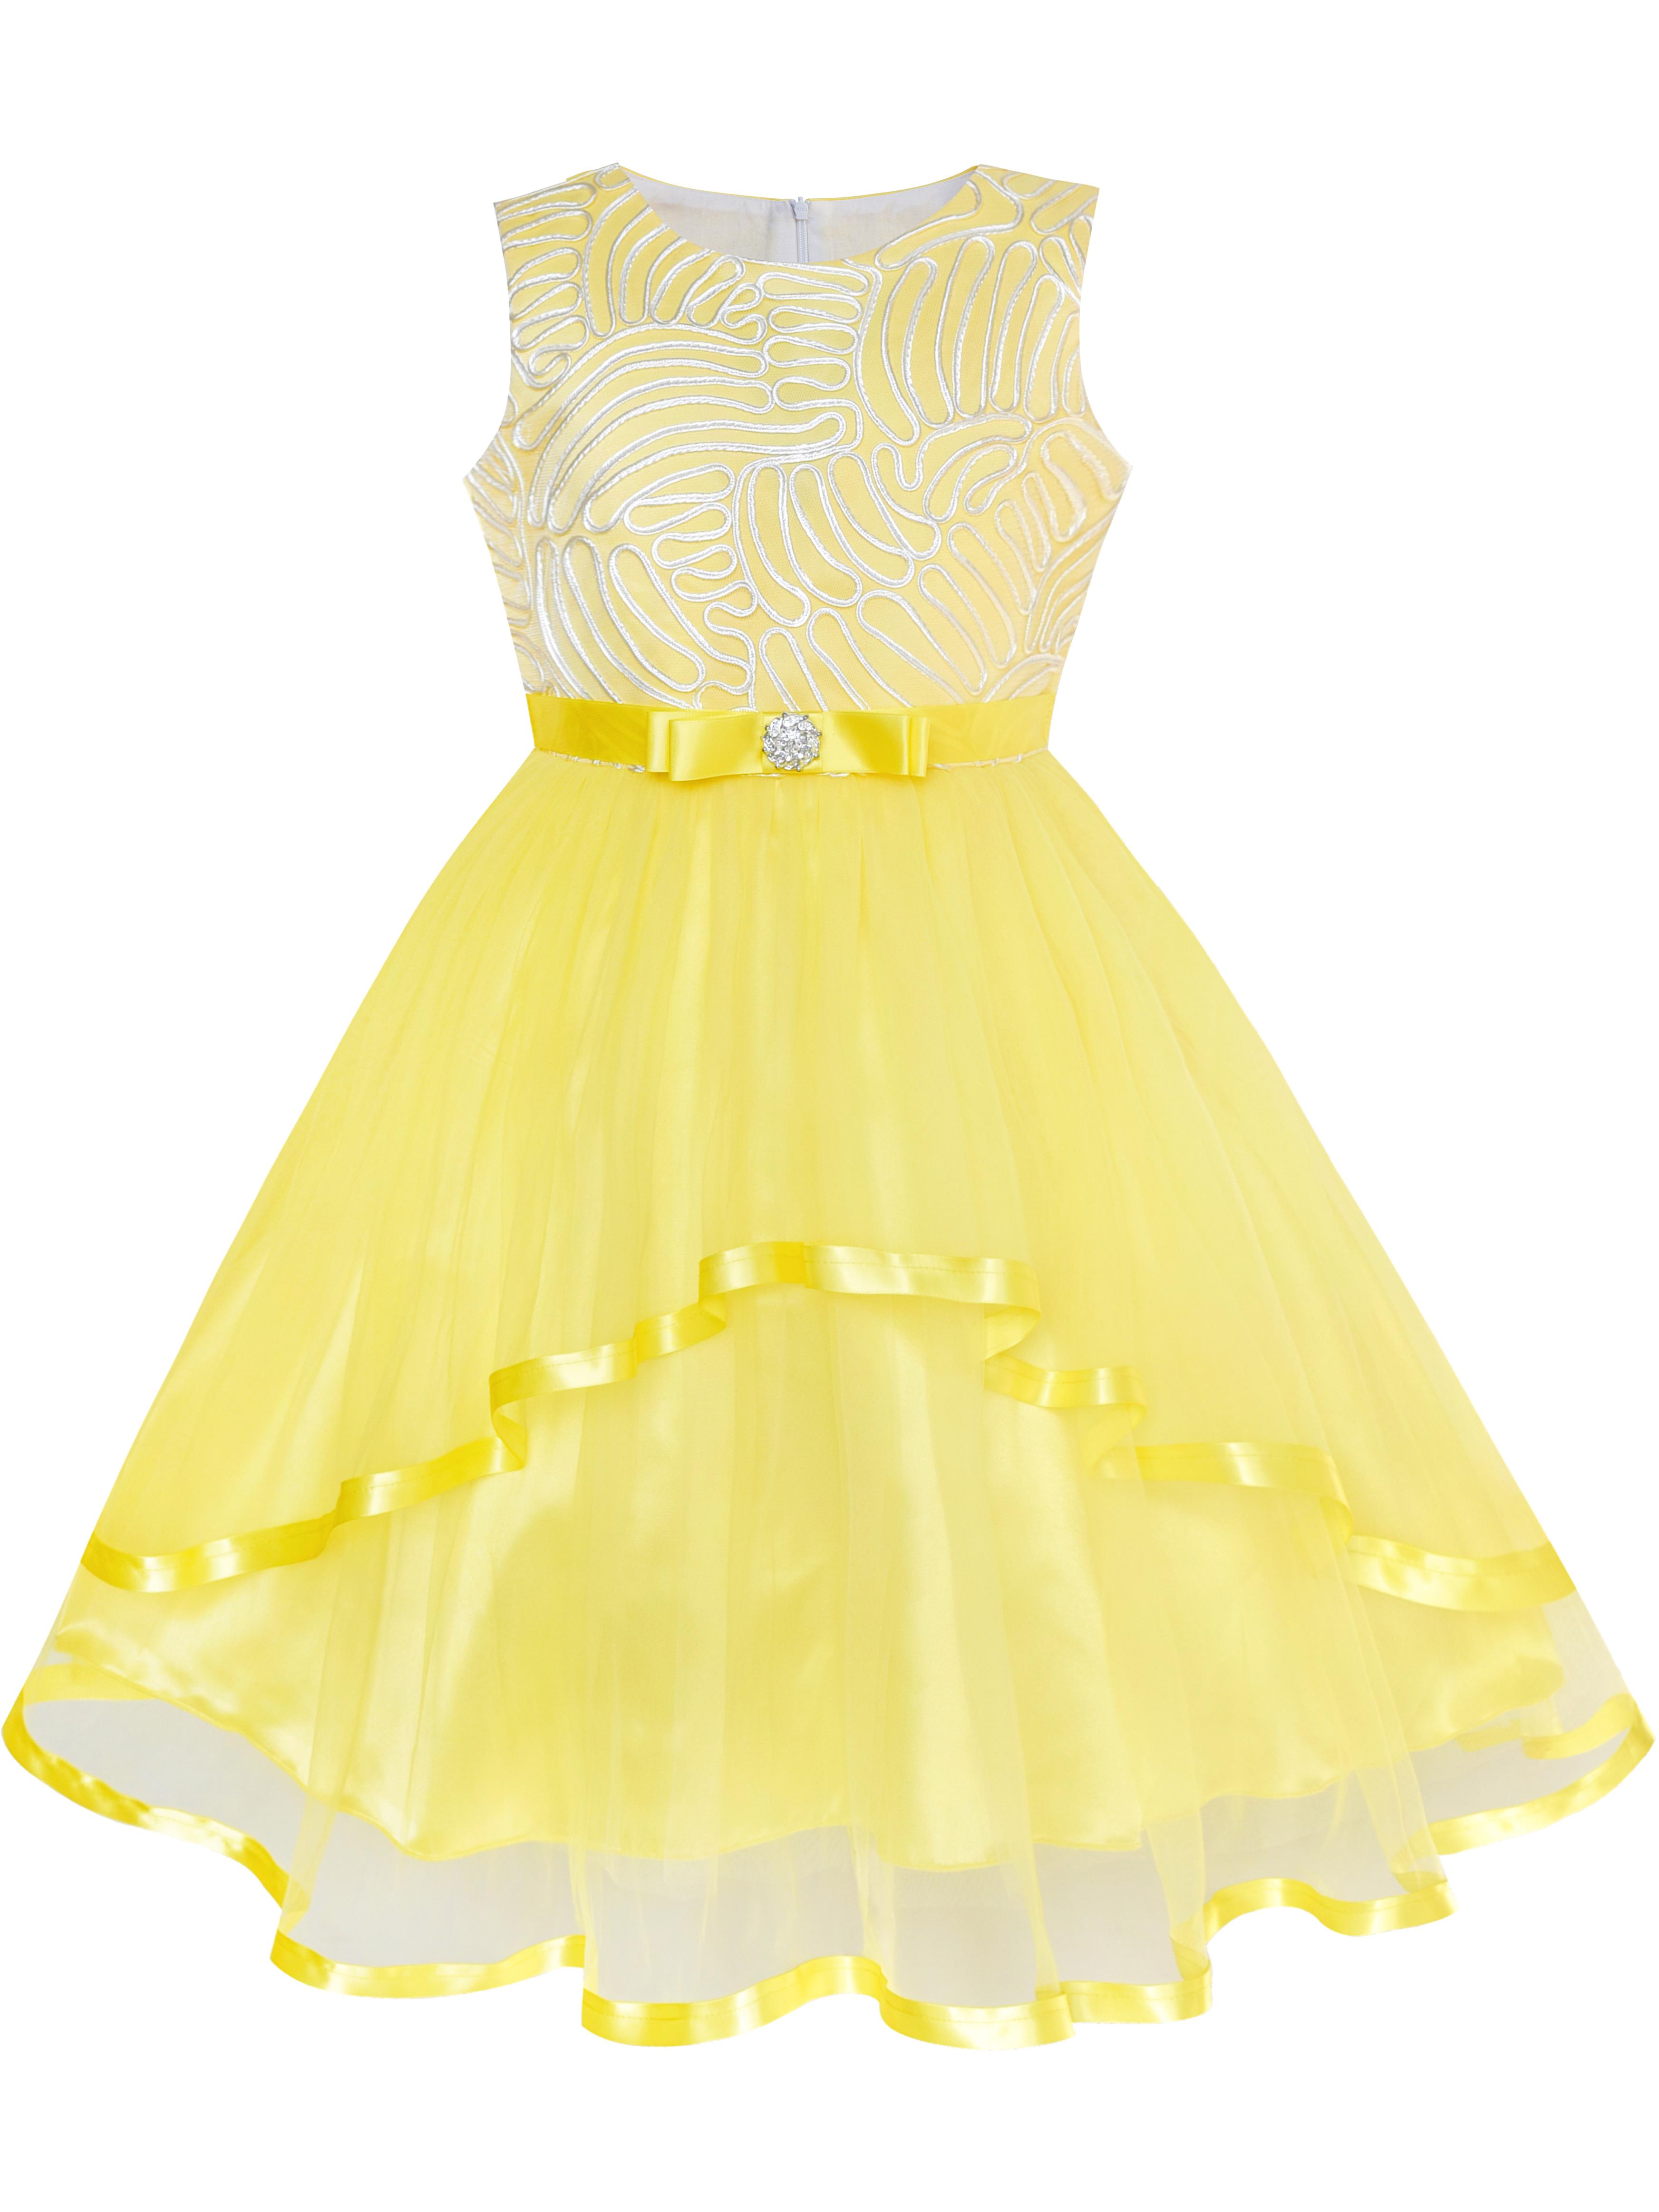 AnnaLin Yellow Tulle with Sunflower Belt Flower Girl Dress for Wedding Party Kids Prom Dress